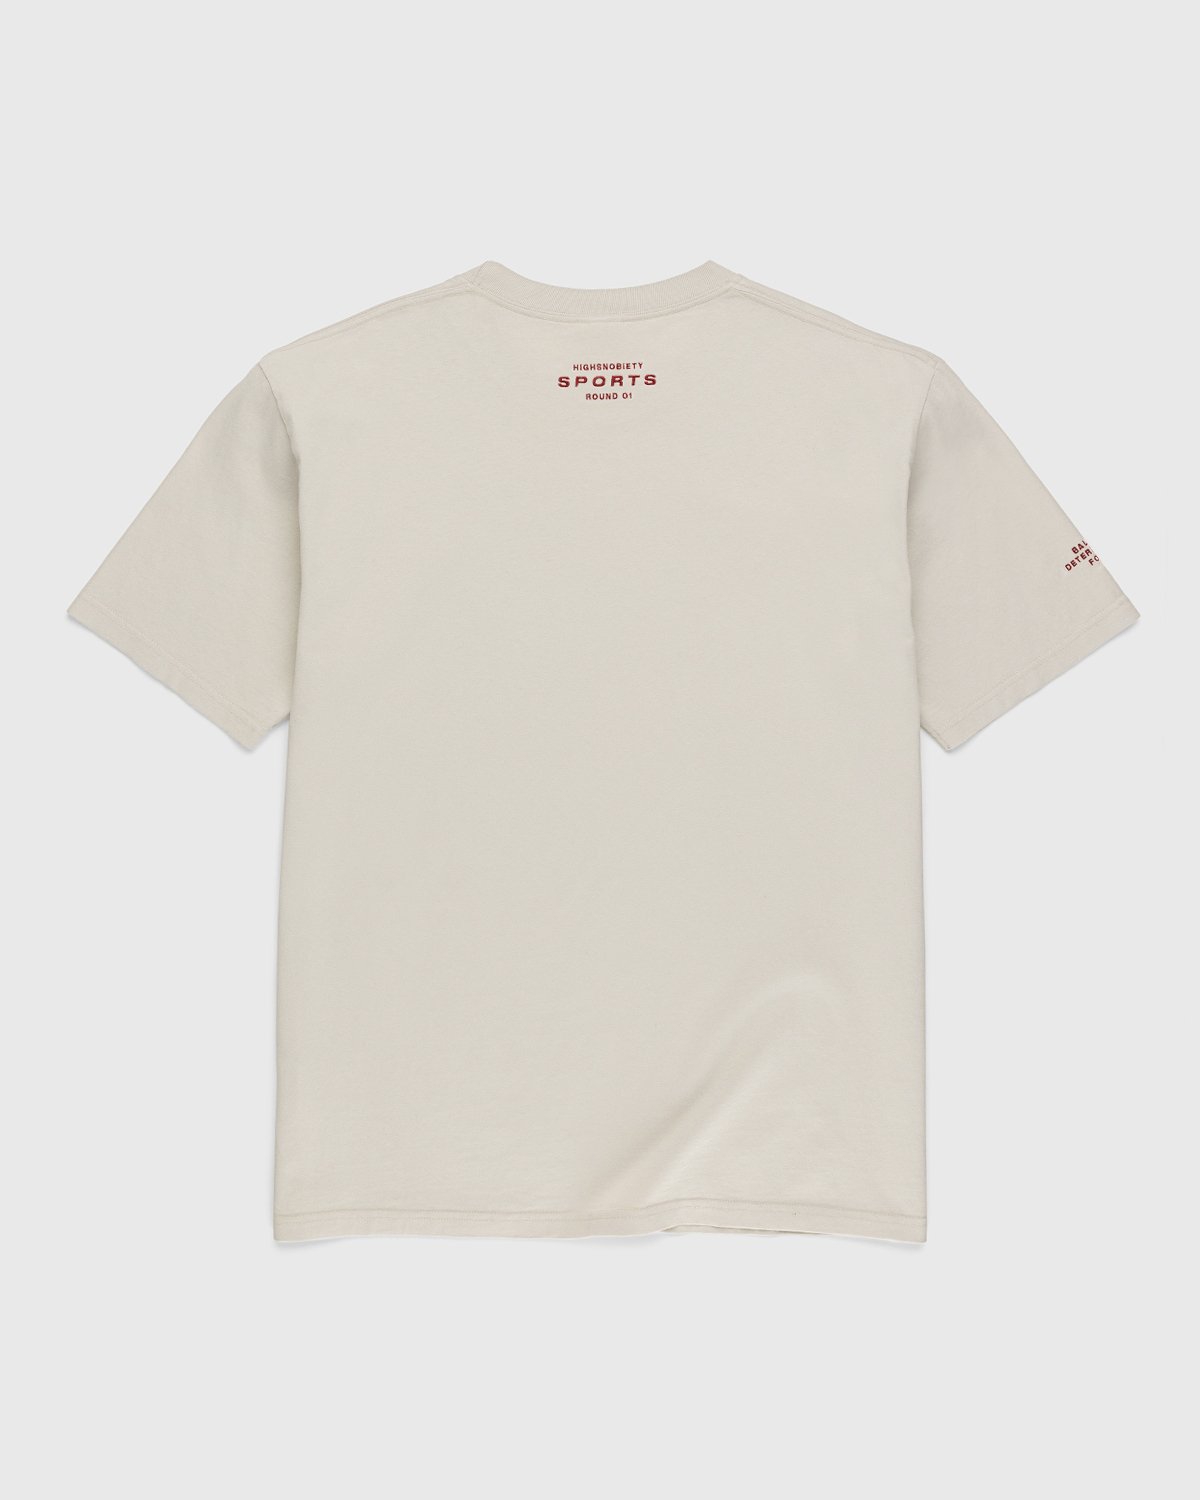 Highsnobiety - HS Sports Focus T-Shirt Eggshell - Clothing - White - Image 2